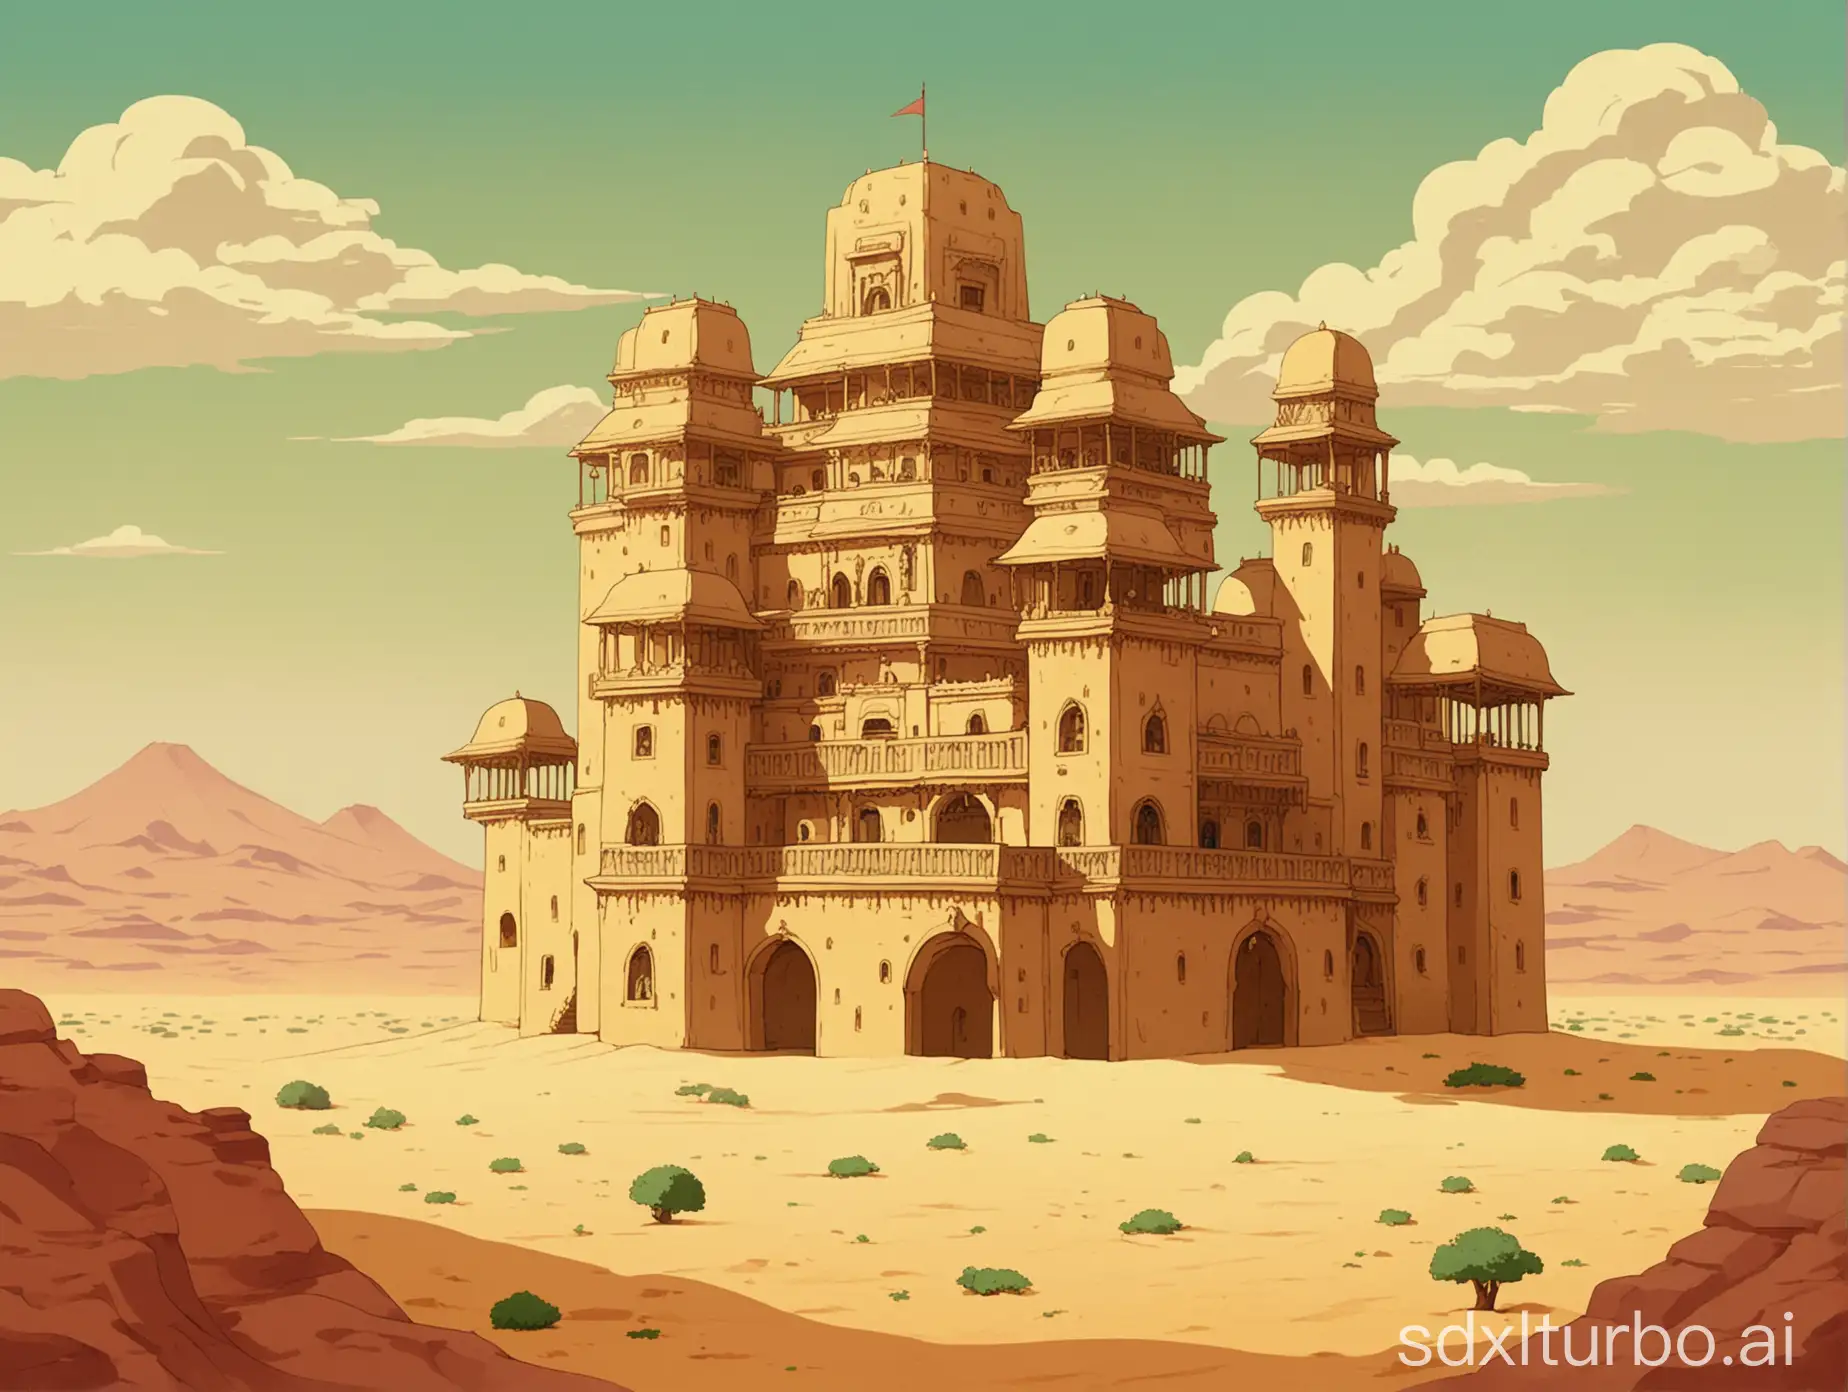 Majestic-Desert-Palace-Hayao-MiyazakiInspired-Painting